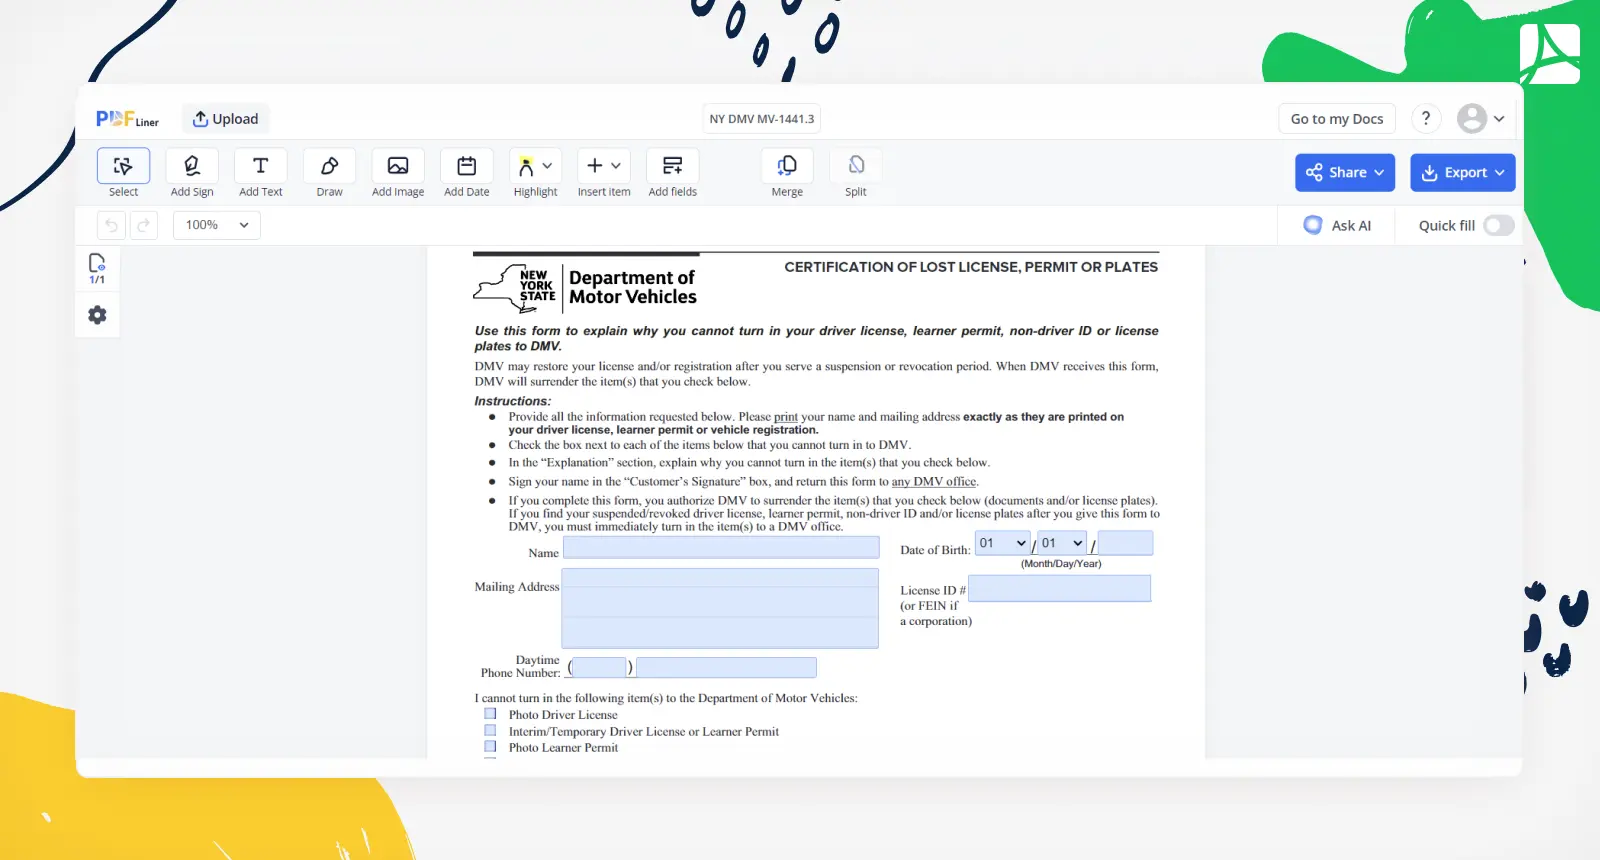 MV 1441.3 ny state lost license certificate screenshot